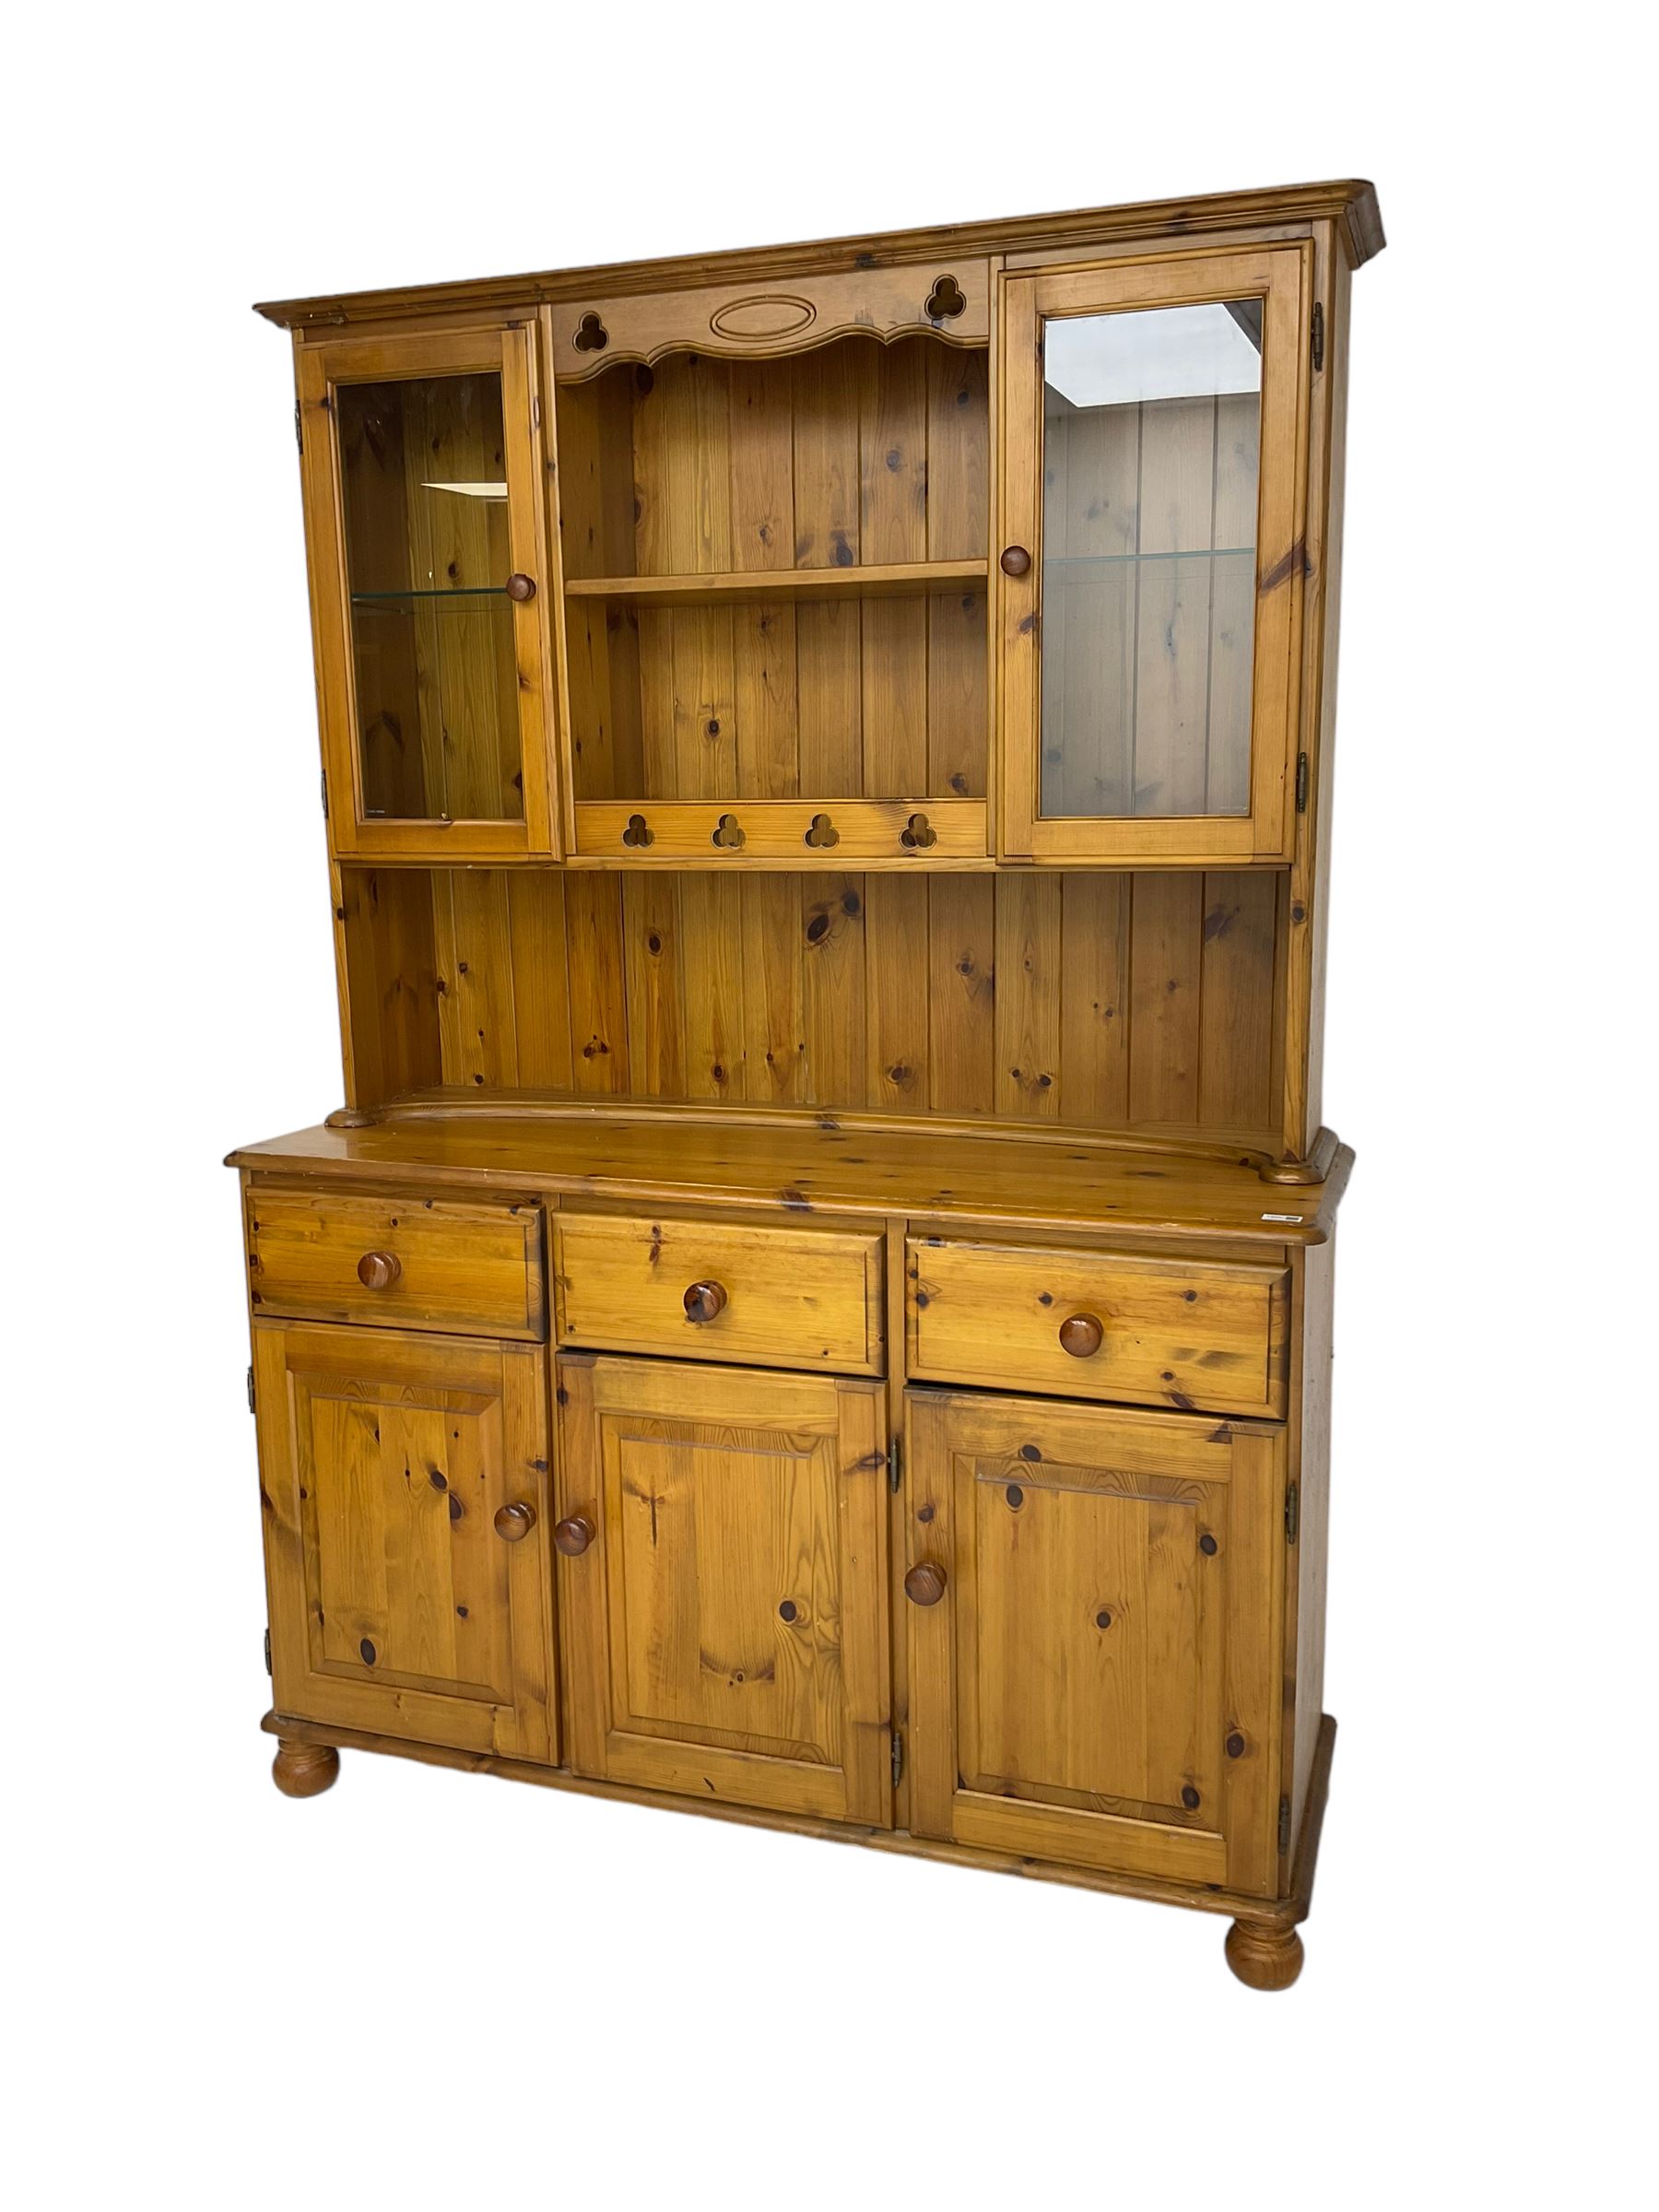 Traditional pine kitchen dresser - Image 6 of 6